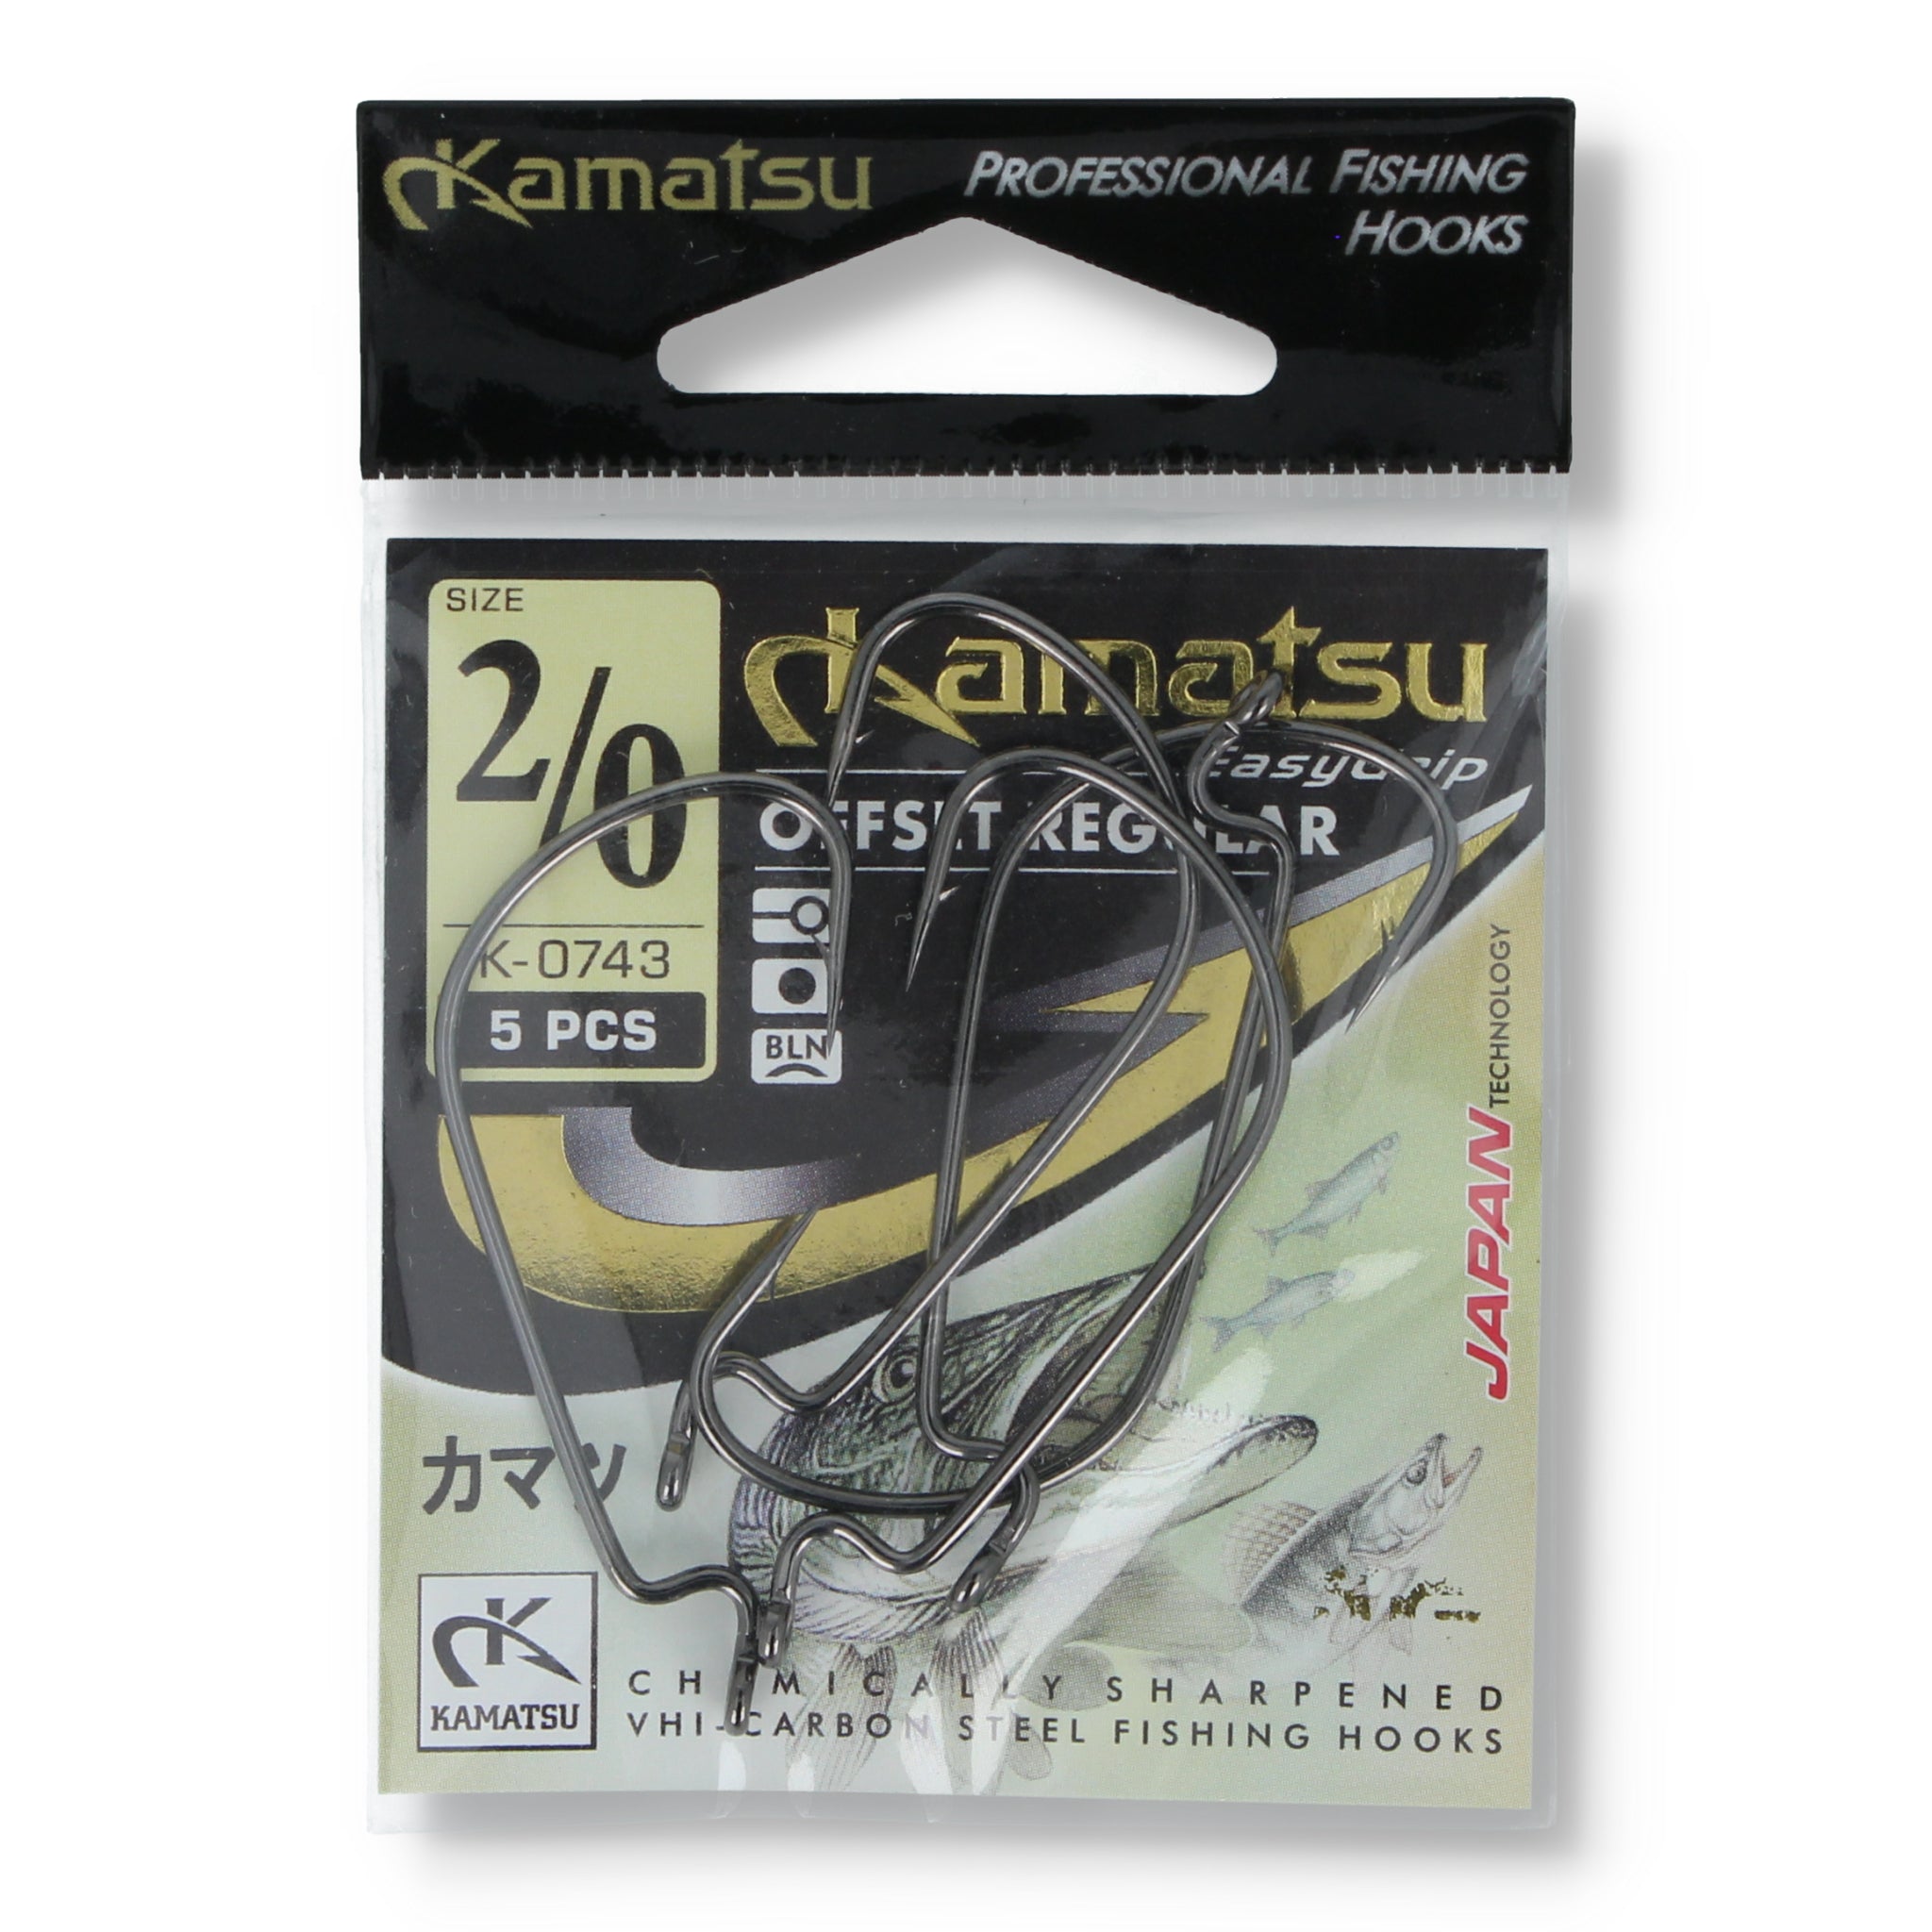 Kamatsu EasyGrip Offset Regular Hooks